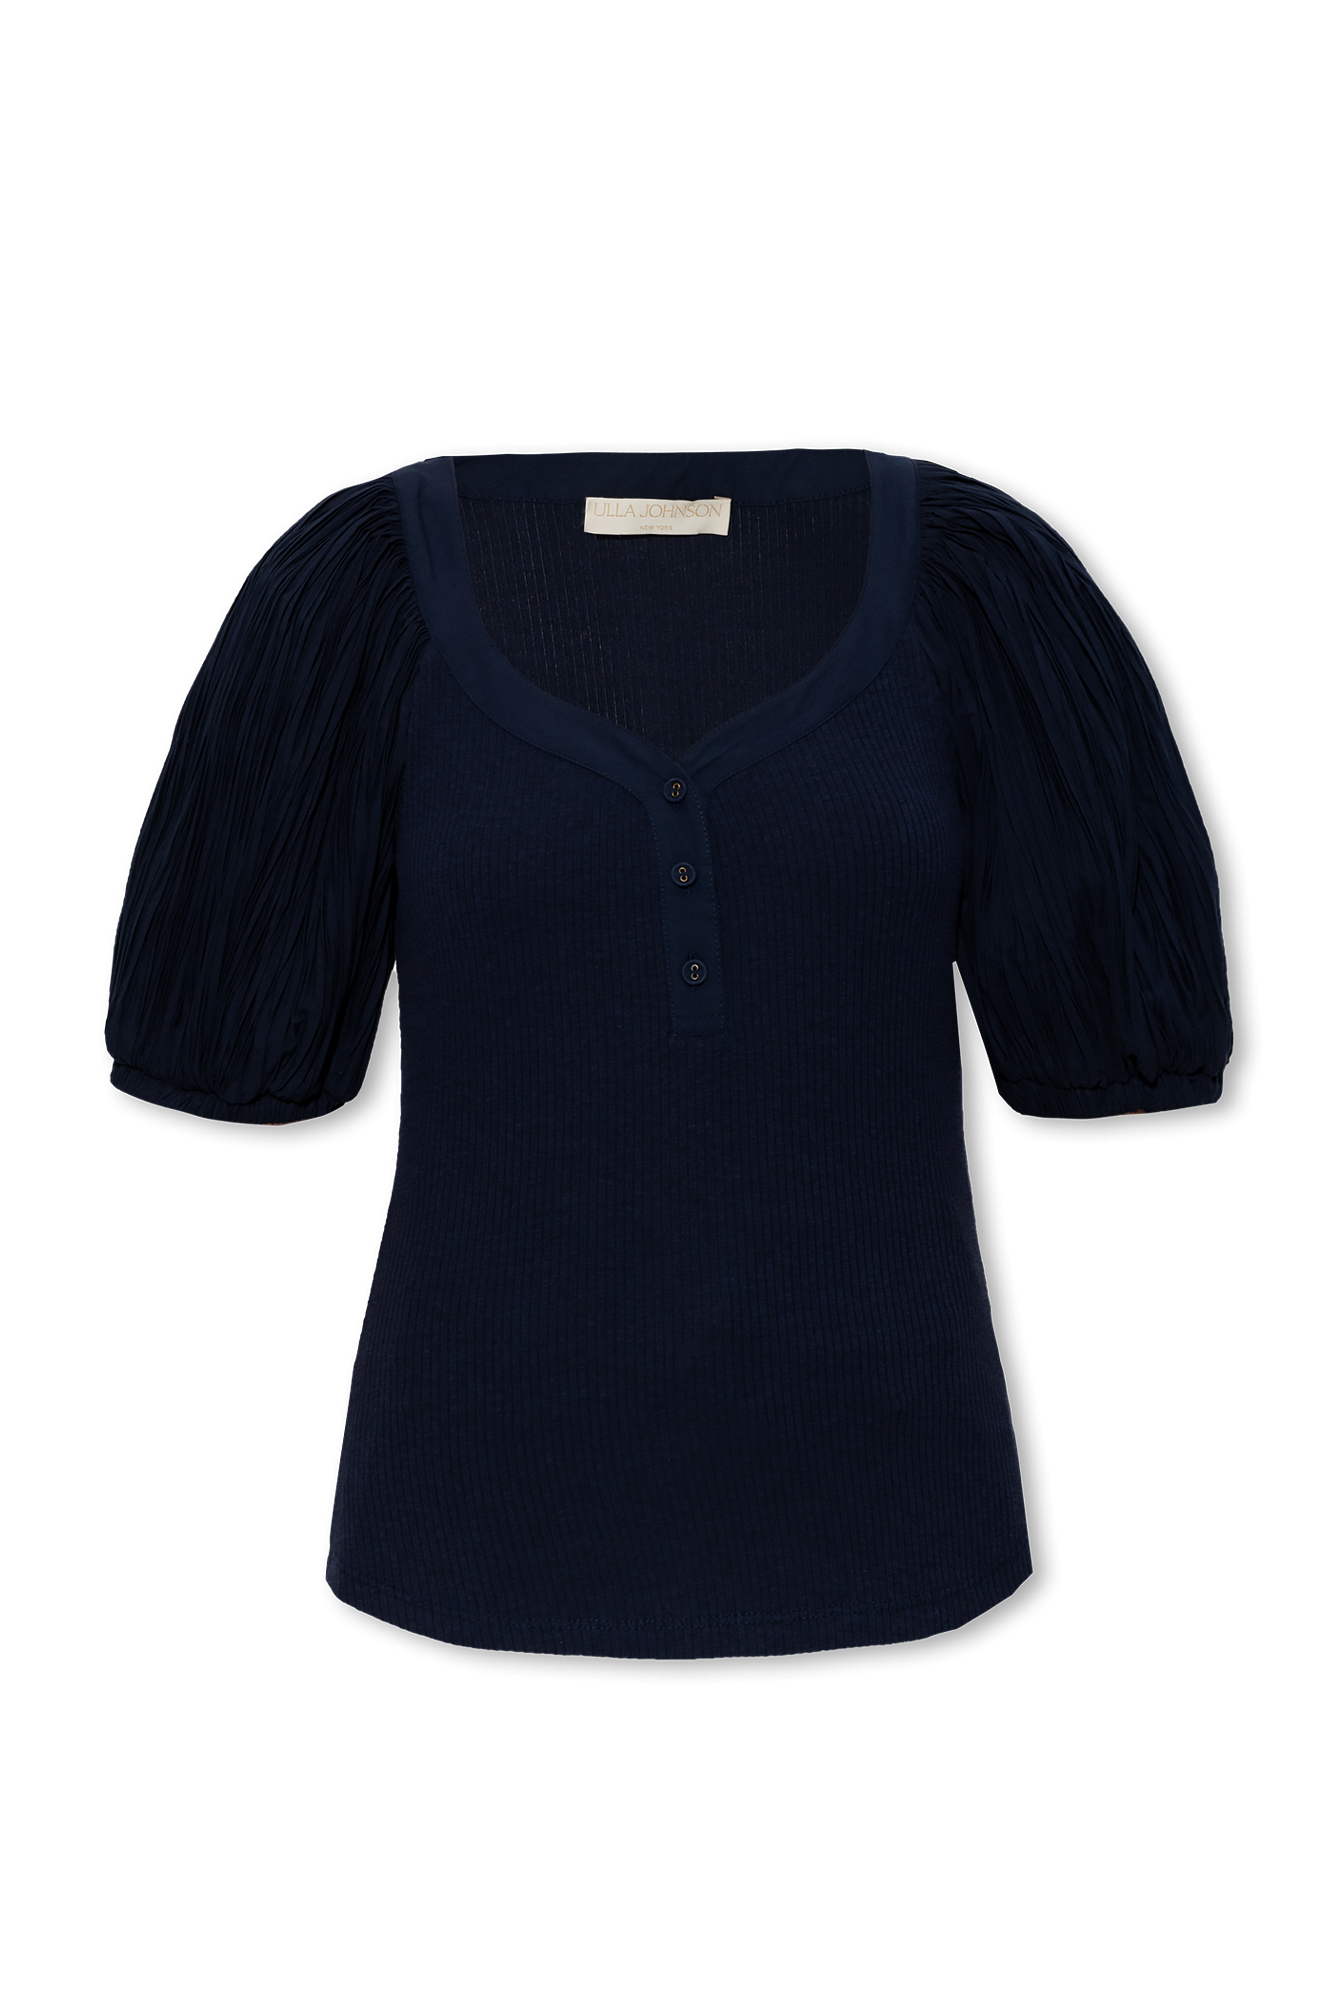 Ulla Johnson 'Marika' top with pleated sleeves, Women's Clothing